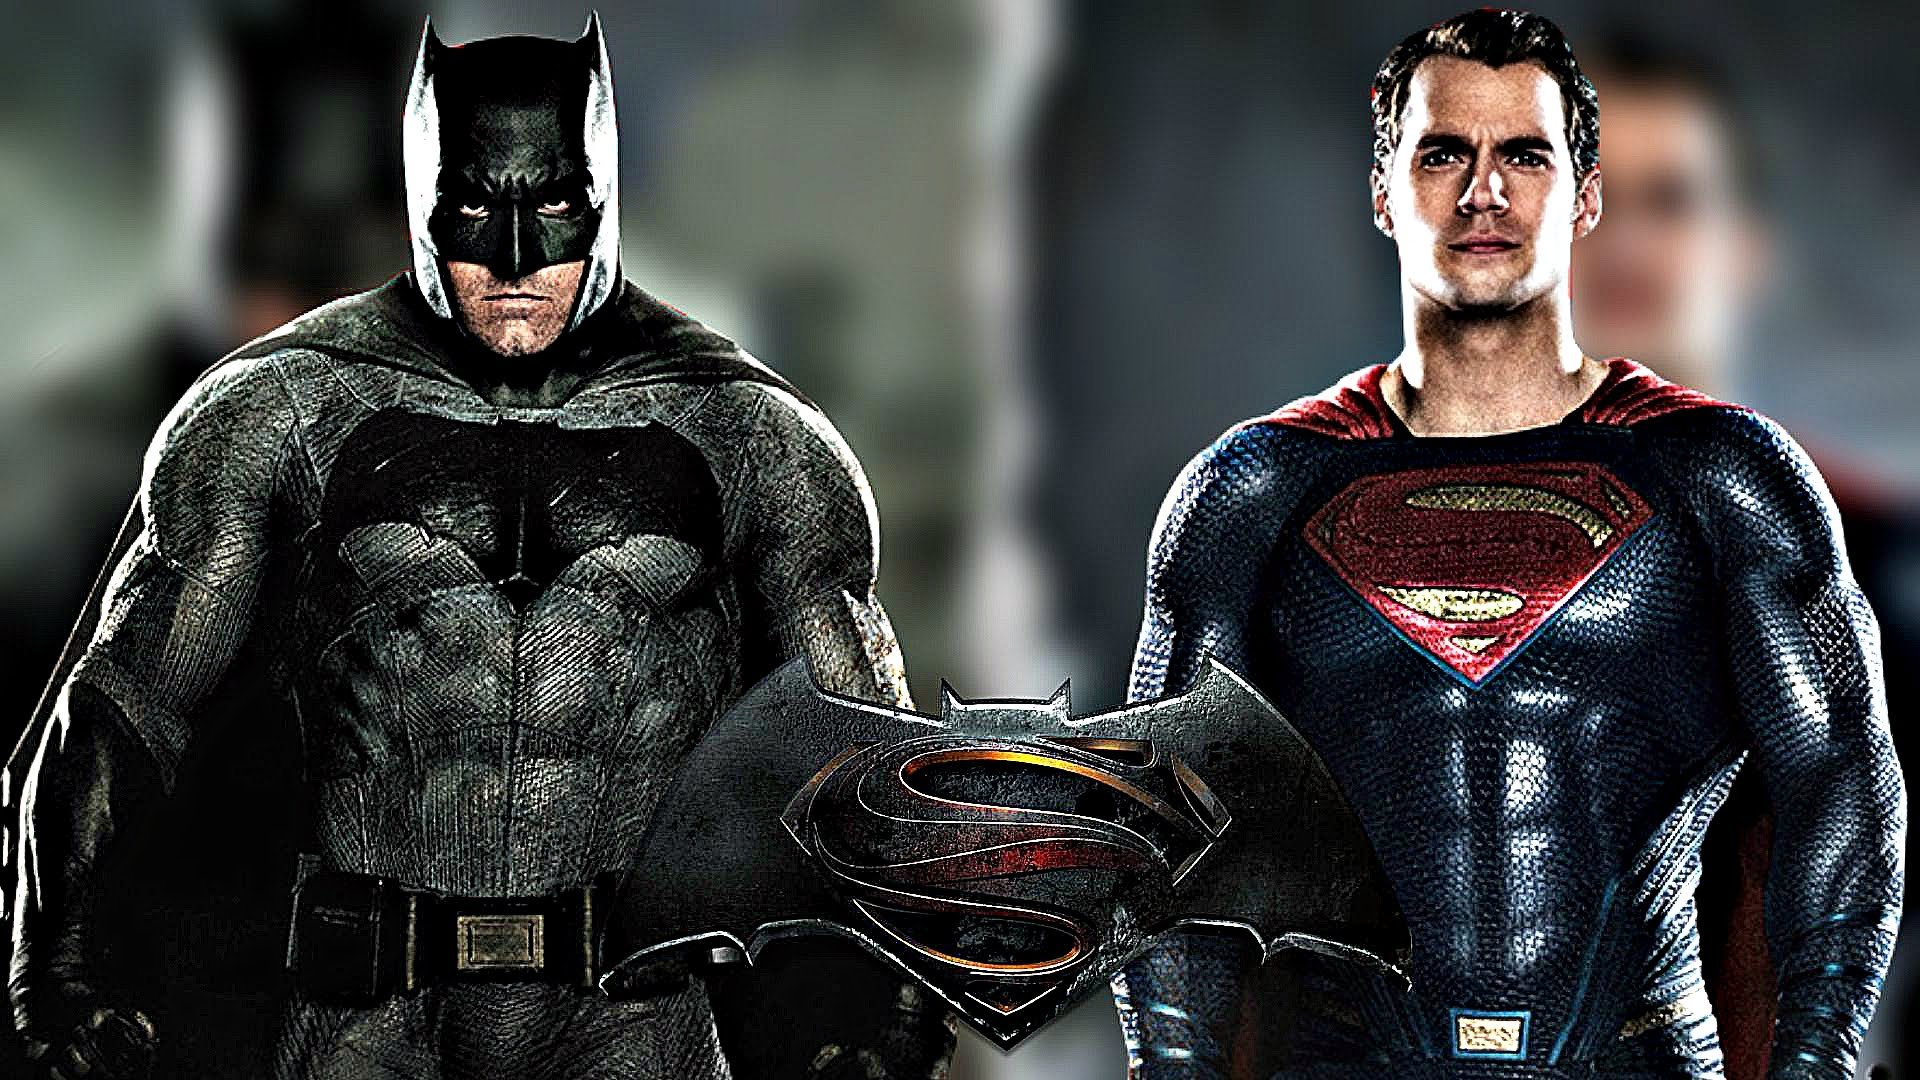 batman vs dracula full movie free online